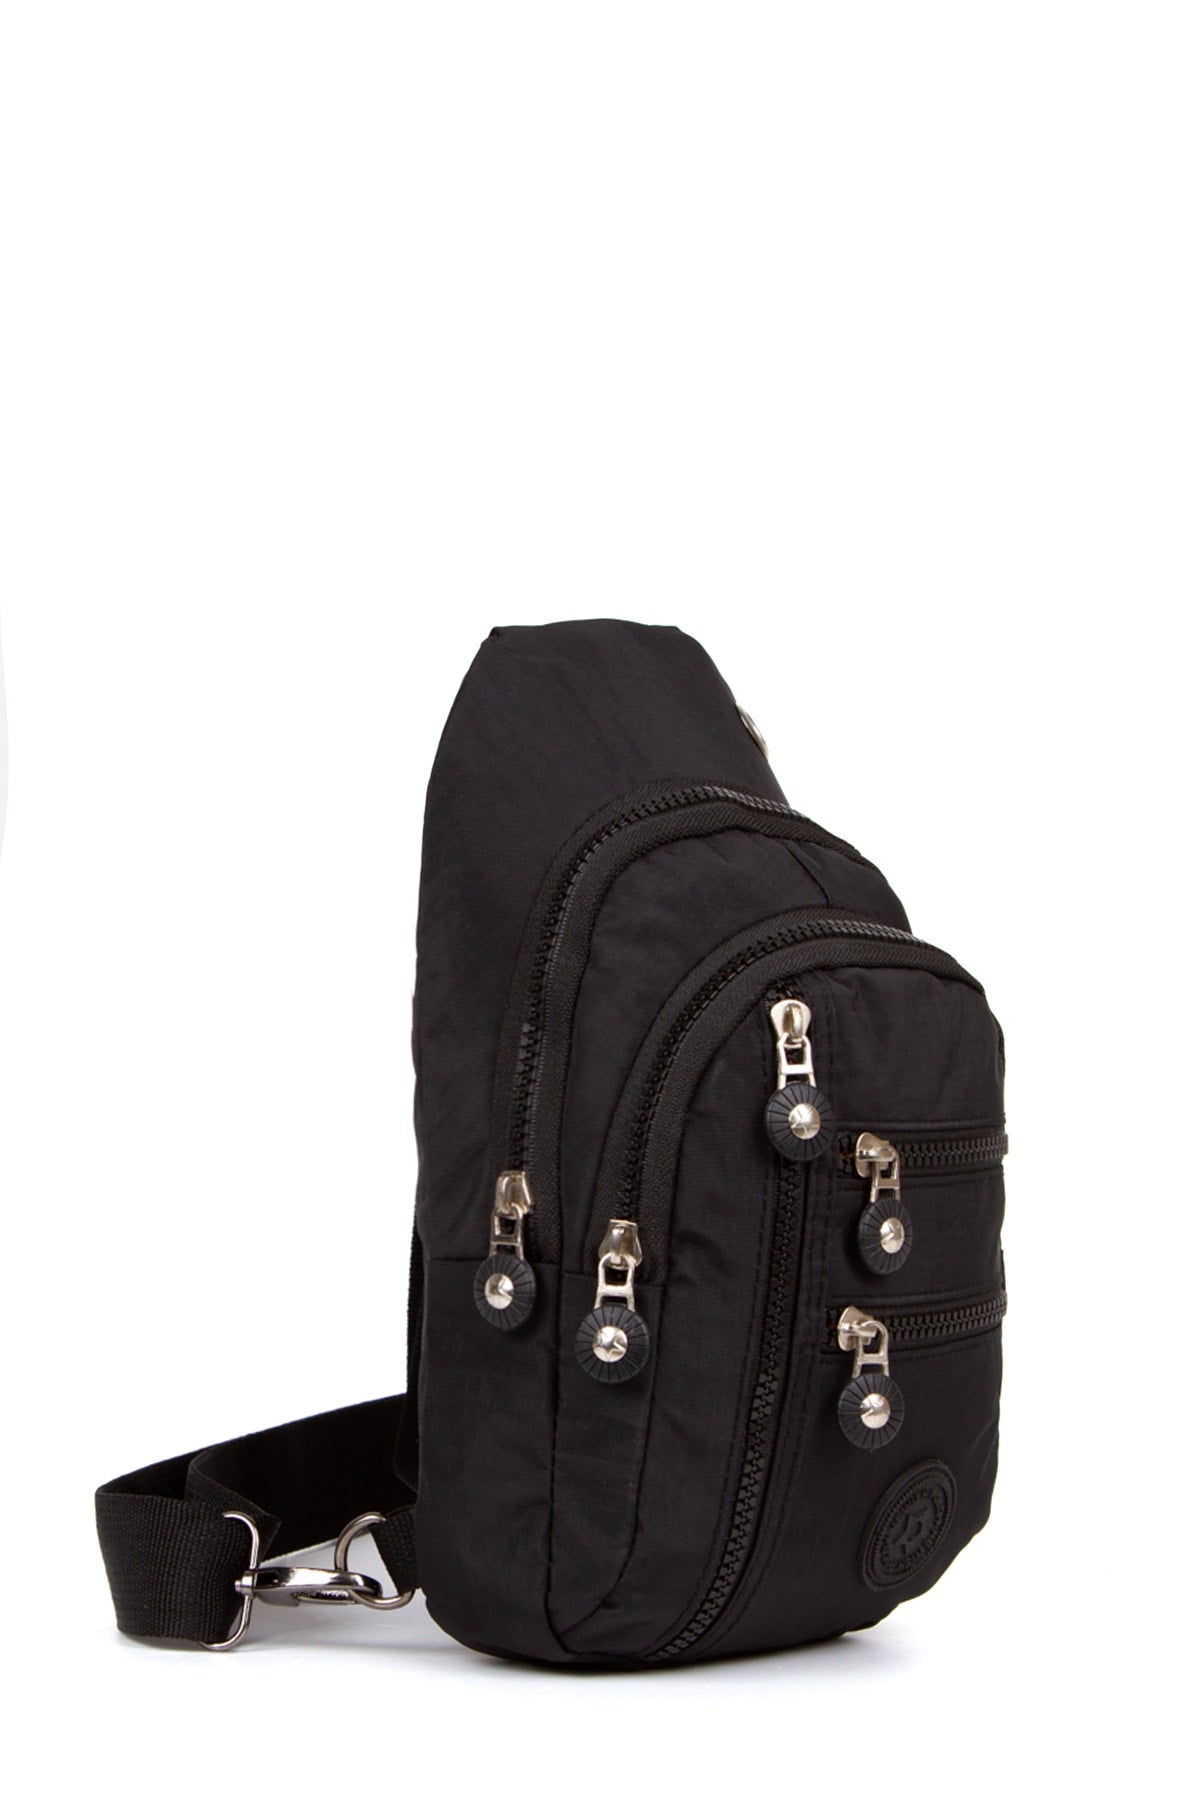 Unisex Crinkled Fabric, Waterproof, Cross Shoulder Bag, Body Bag, Free Bag Black Color, Casual, Sports